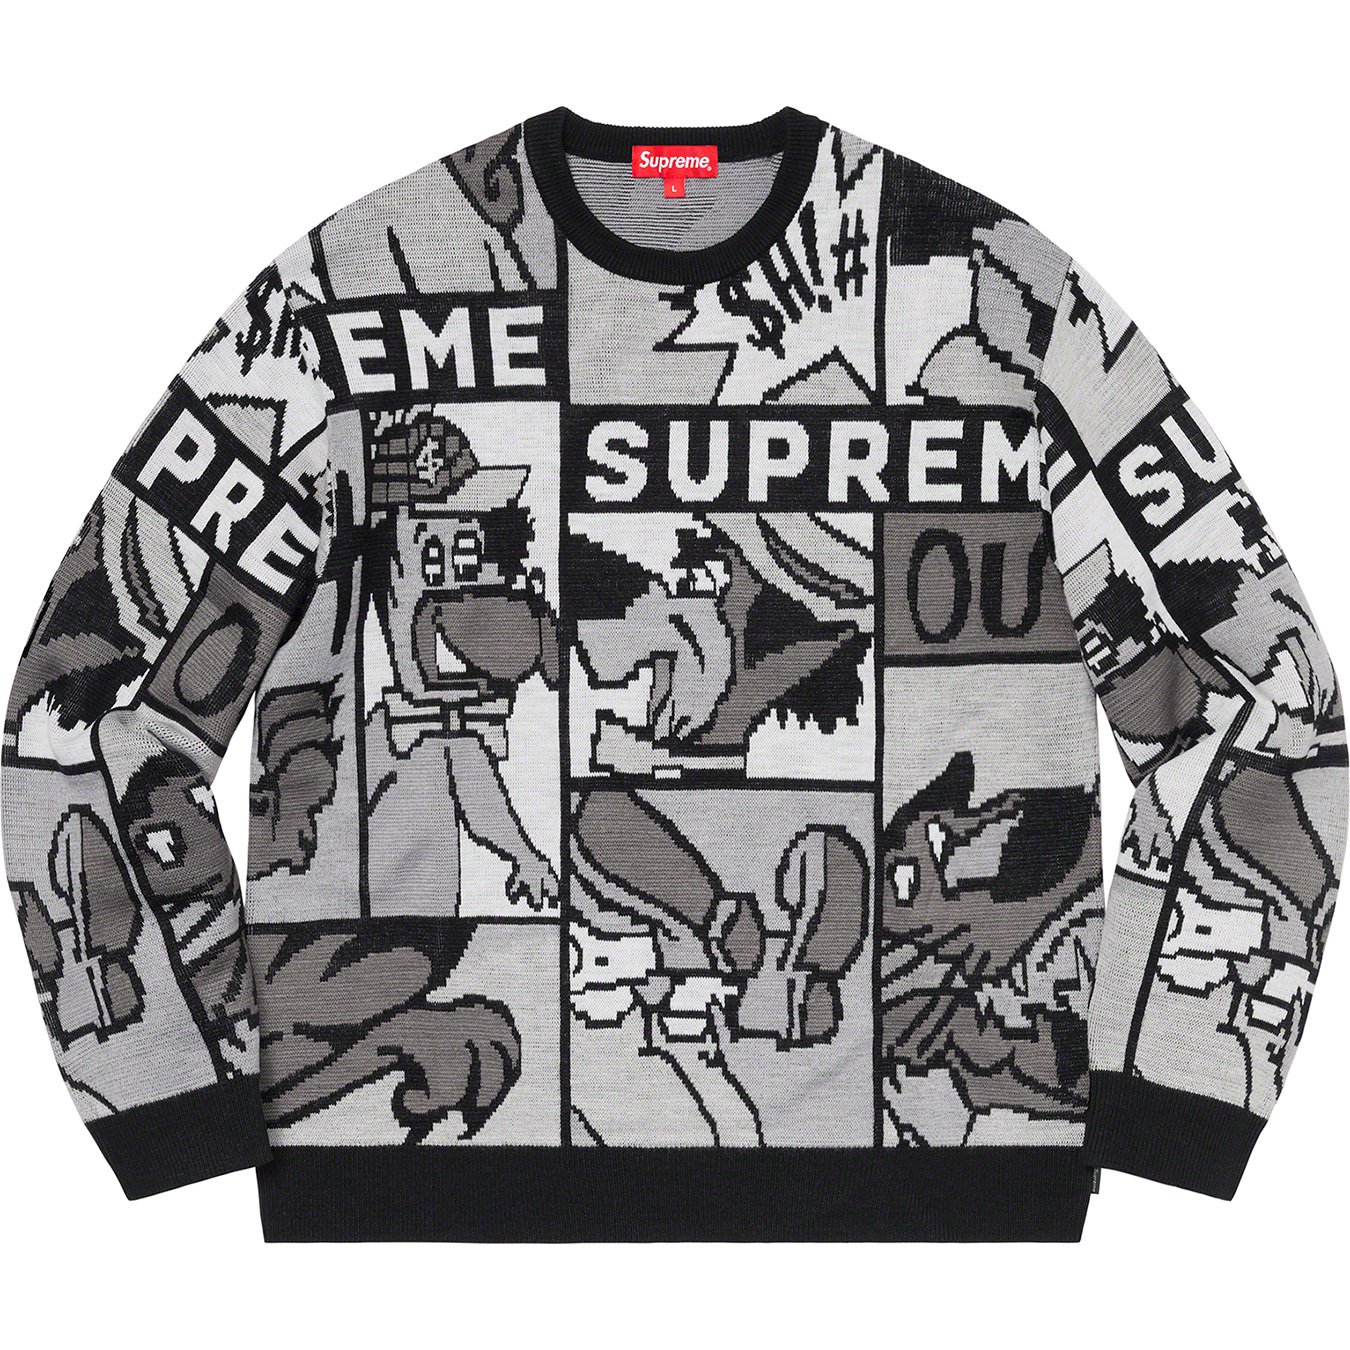 Cartoon Sweater - spring summer 2020 - Supreme